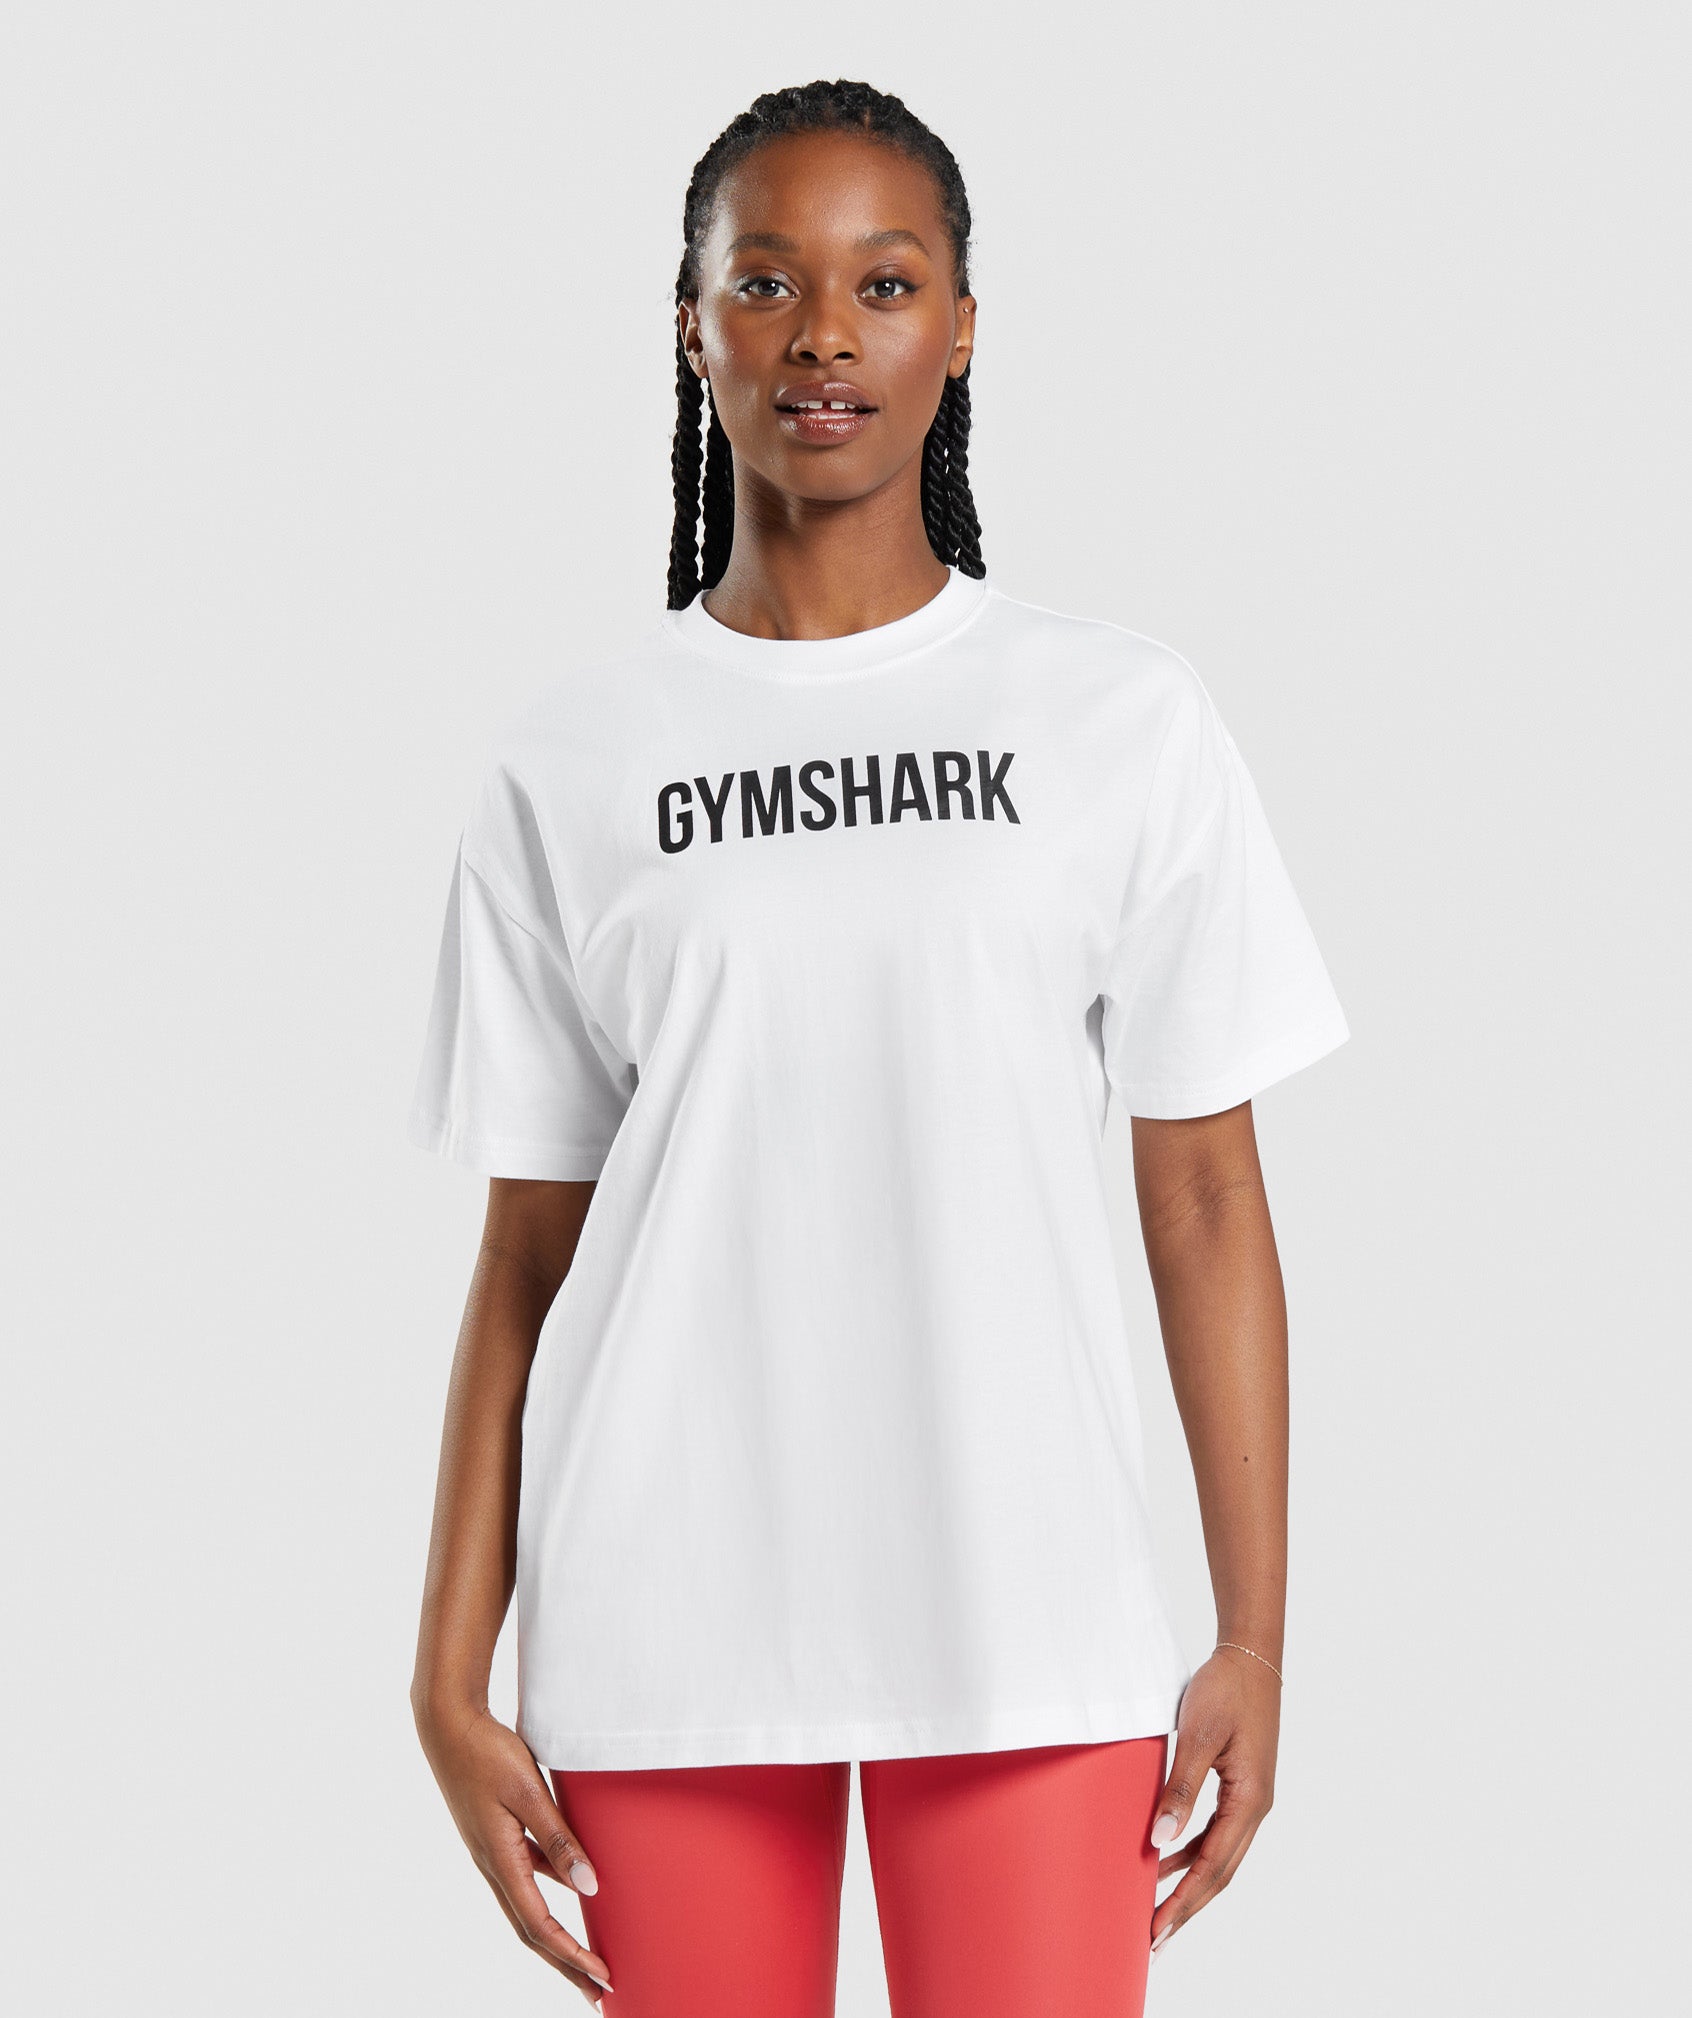 Gymshark 100% Cotton T-shirts for Women